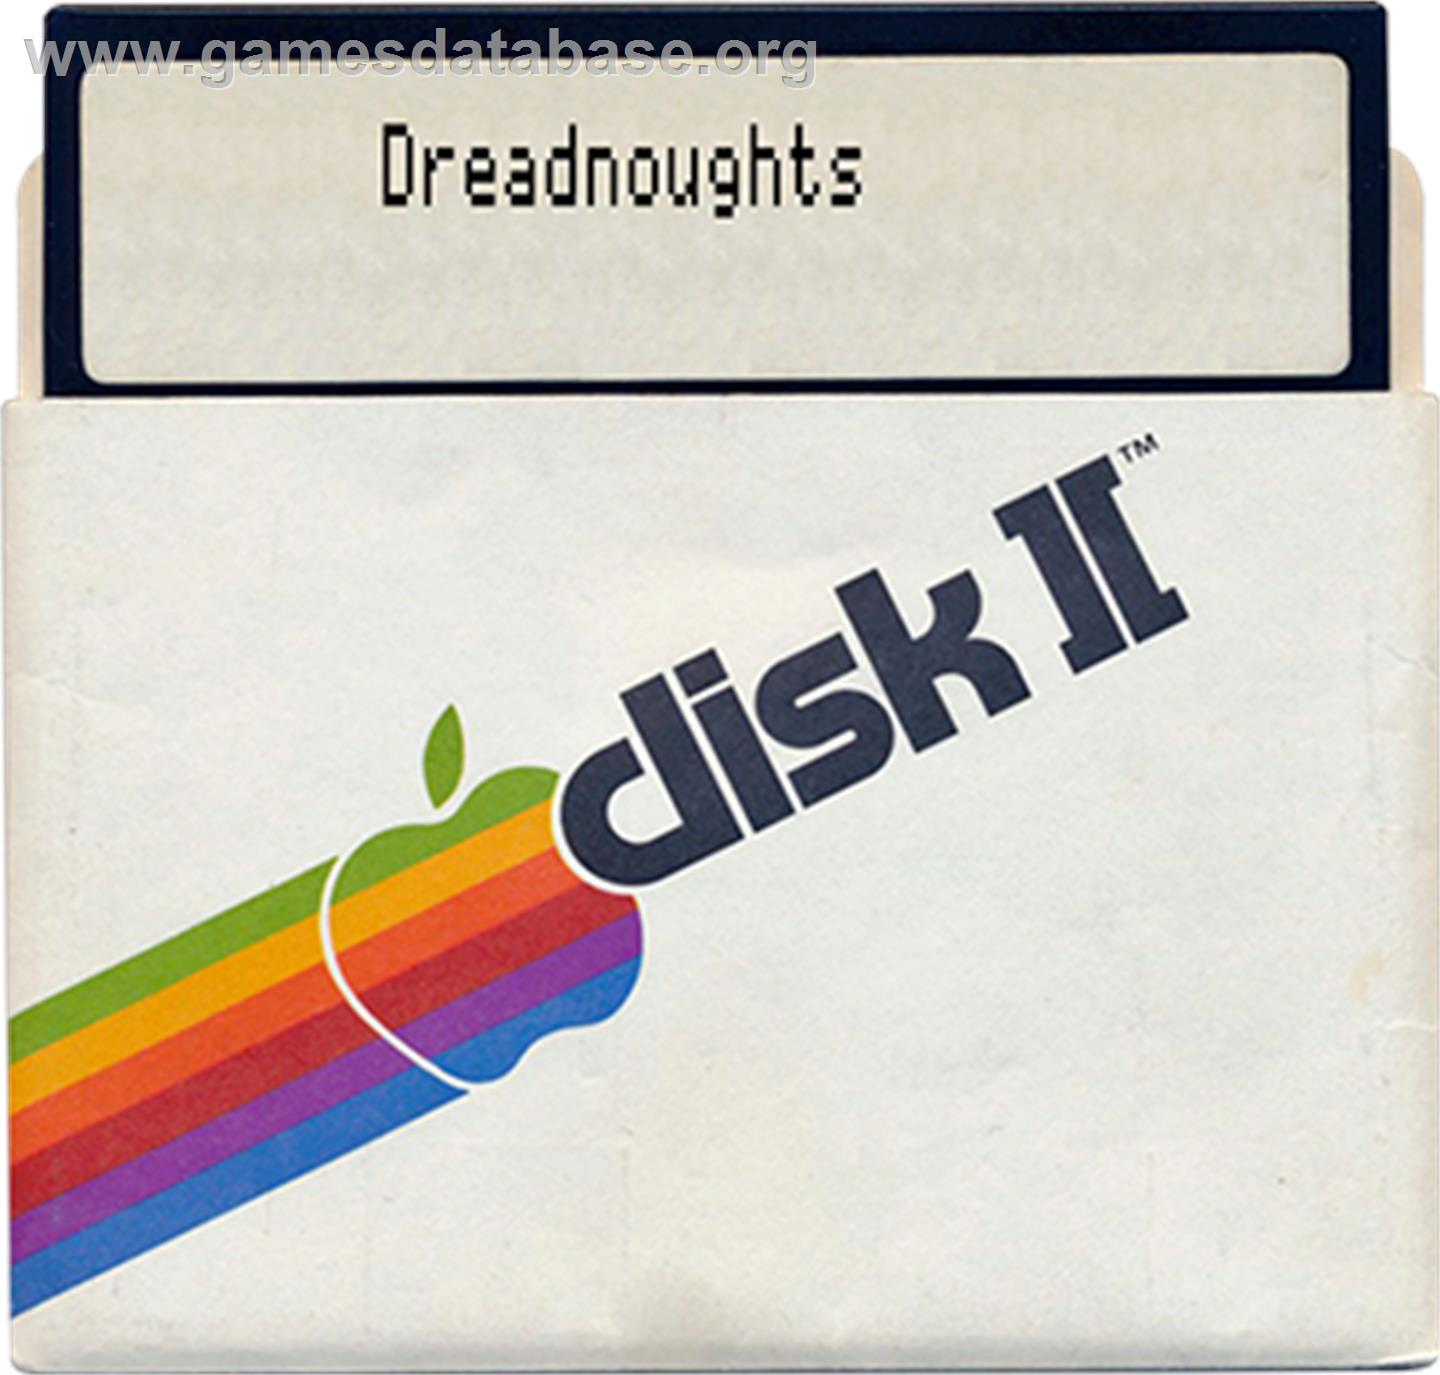 Dreadnoughts - Apple II - Artwork - Disc